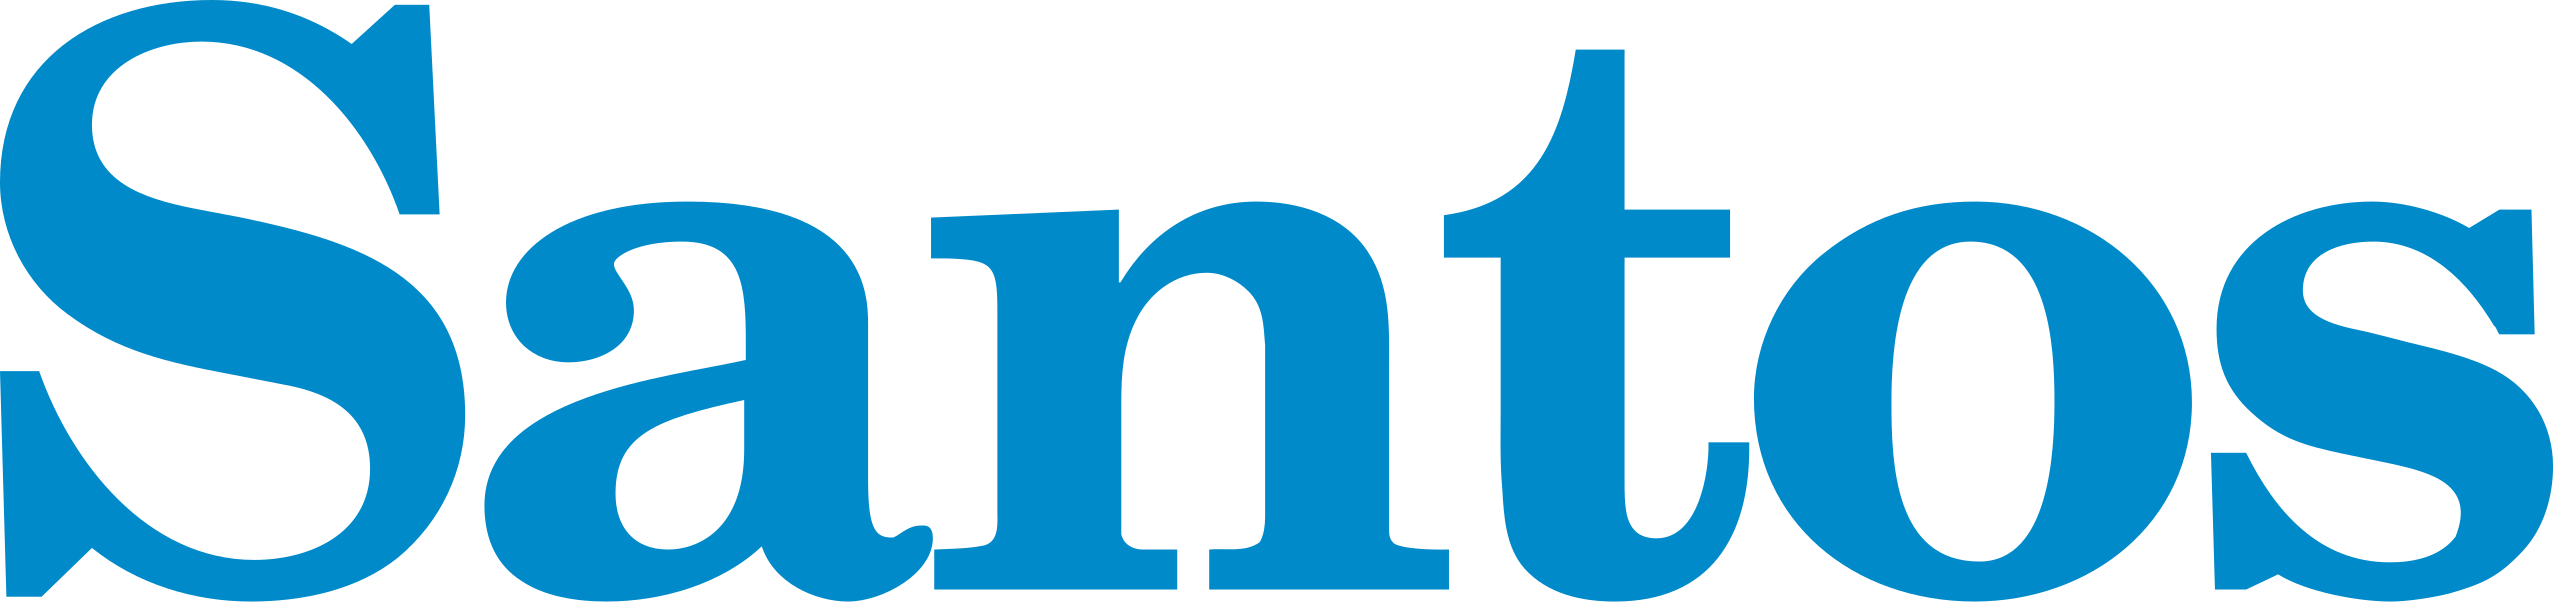 Santos Limited Corporate Logo - Skin Patrol